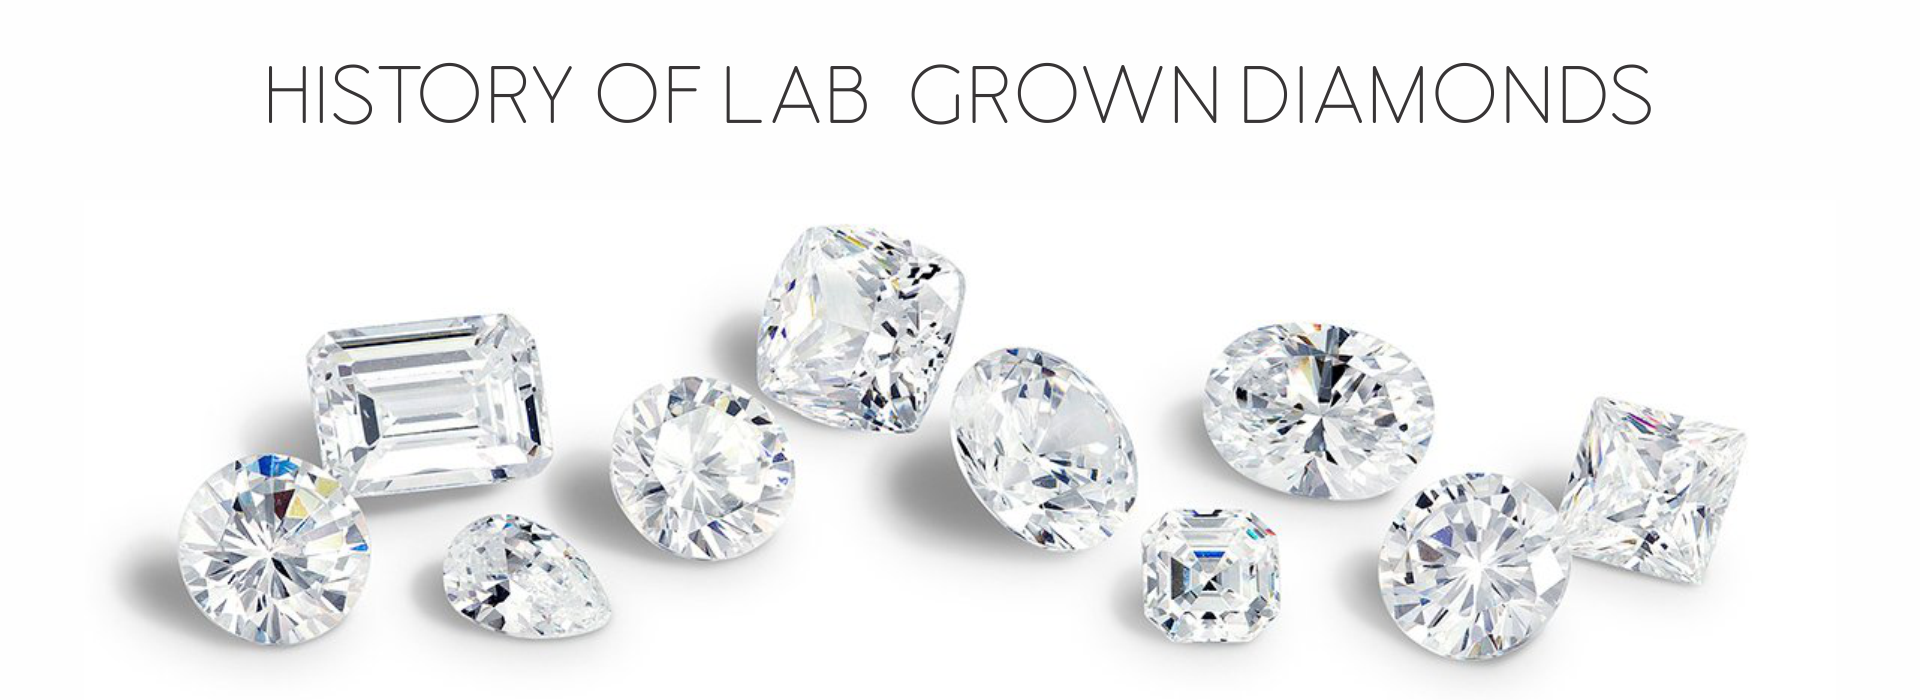 History of lab-grown diamonds V1